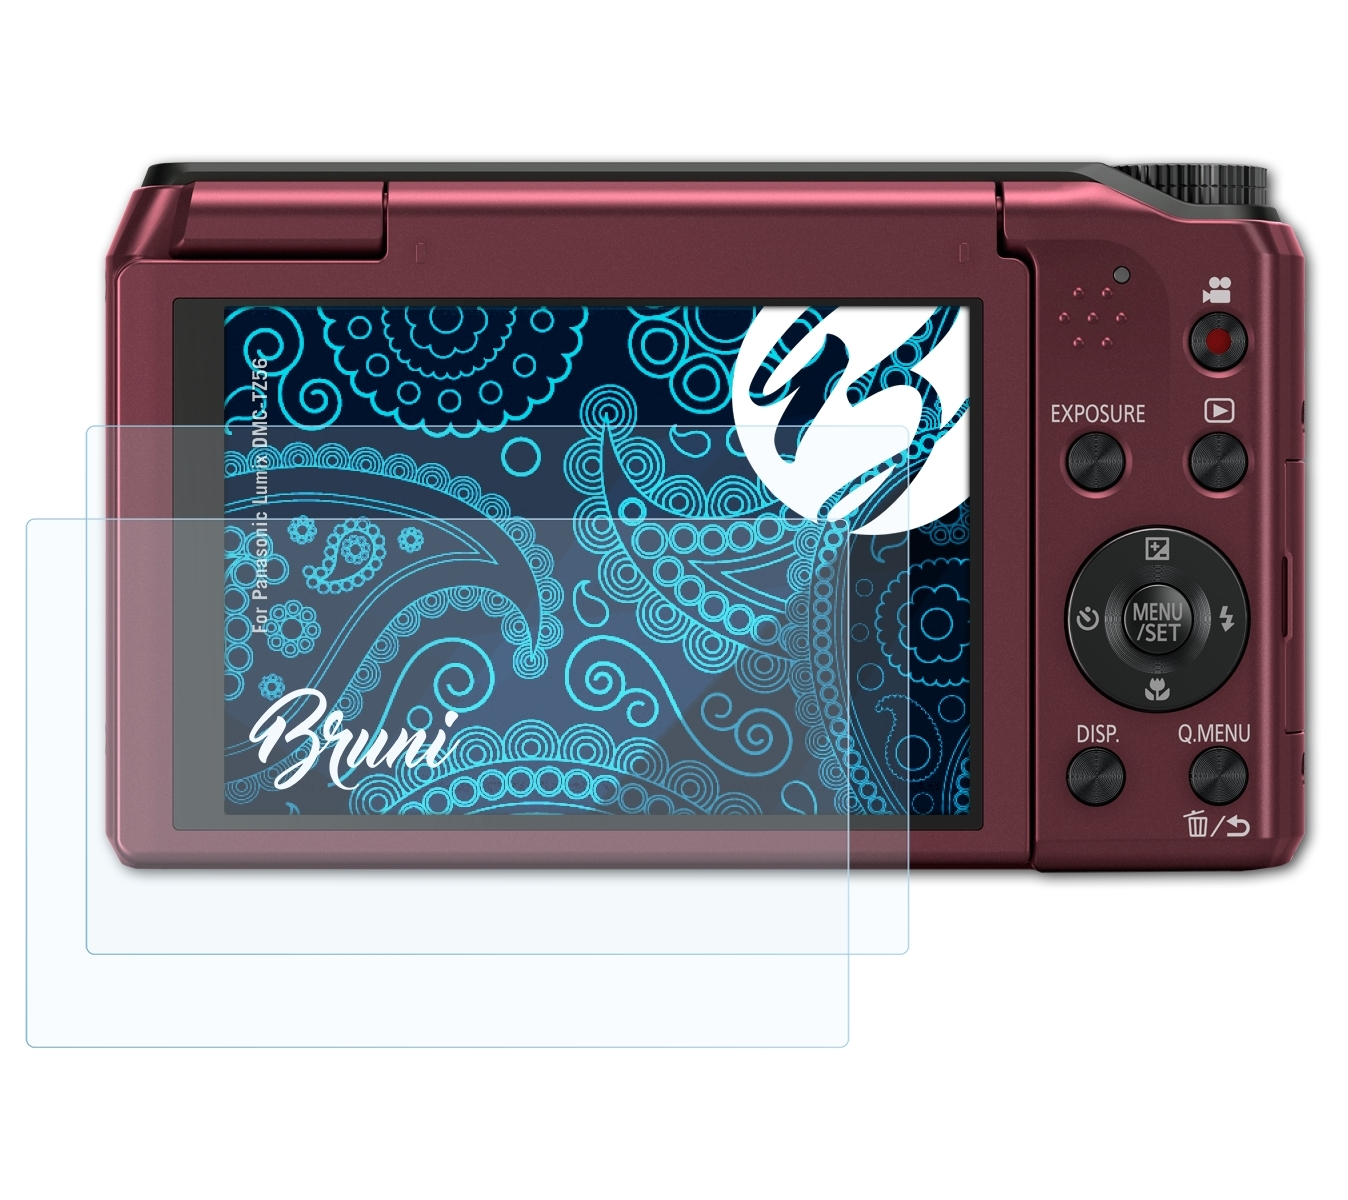 BRUNI Panasonic Schutzfolie(für DMC-TZ56) Basics-Clear Lumix 2x